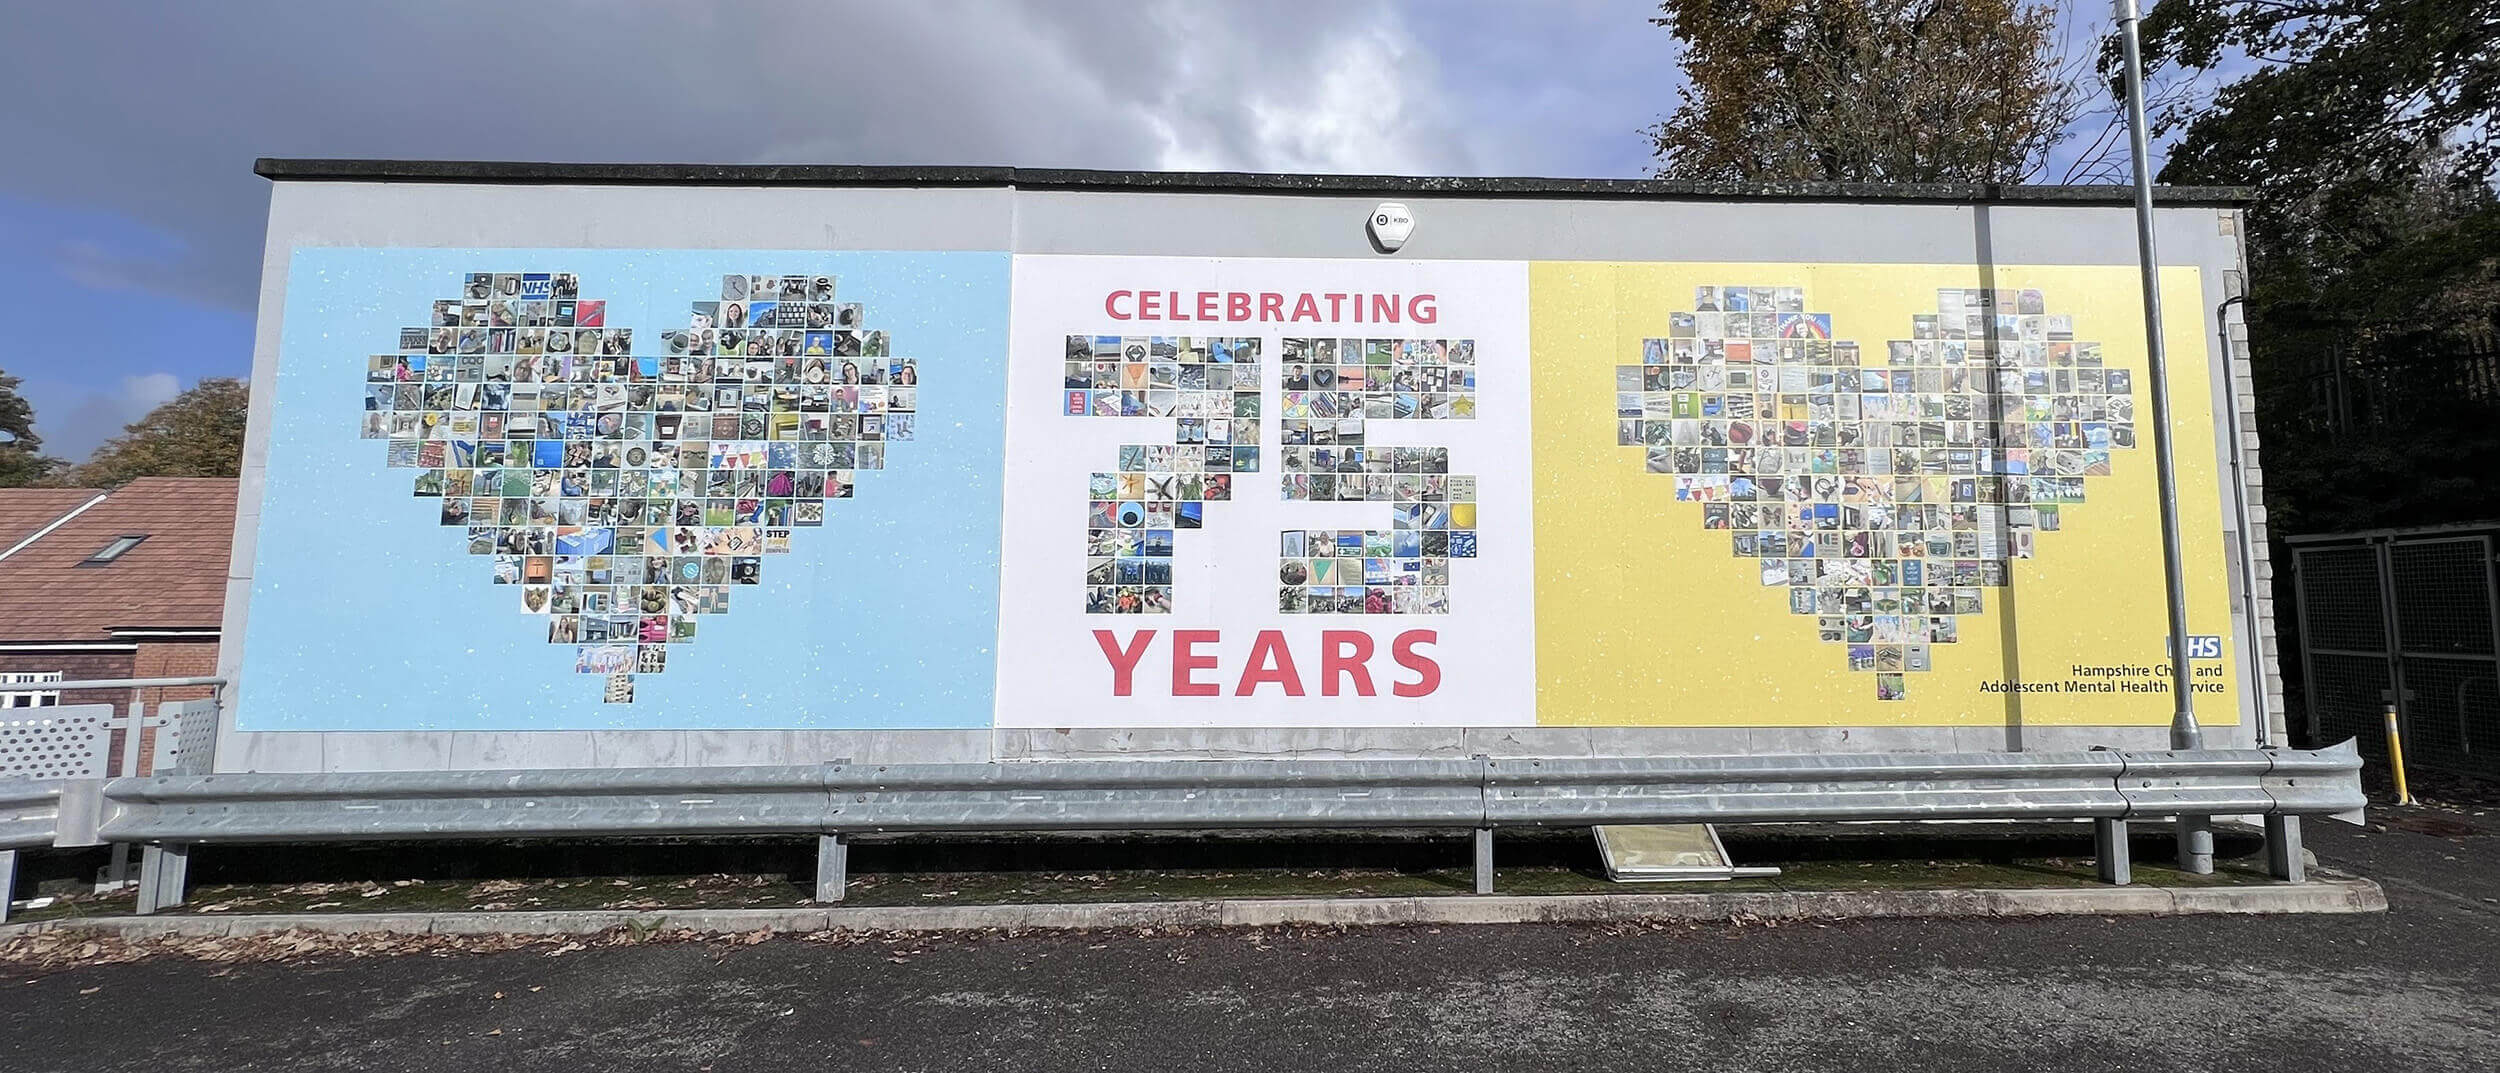 75 years on NHS anniversary billboard